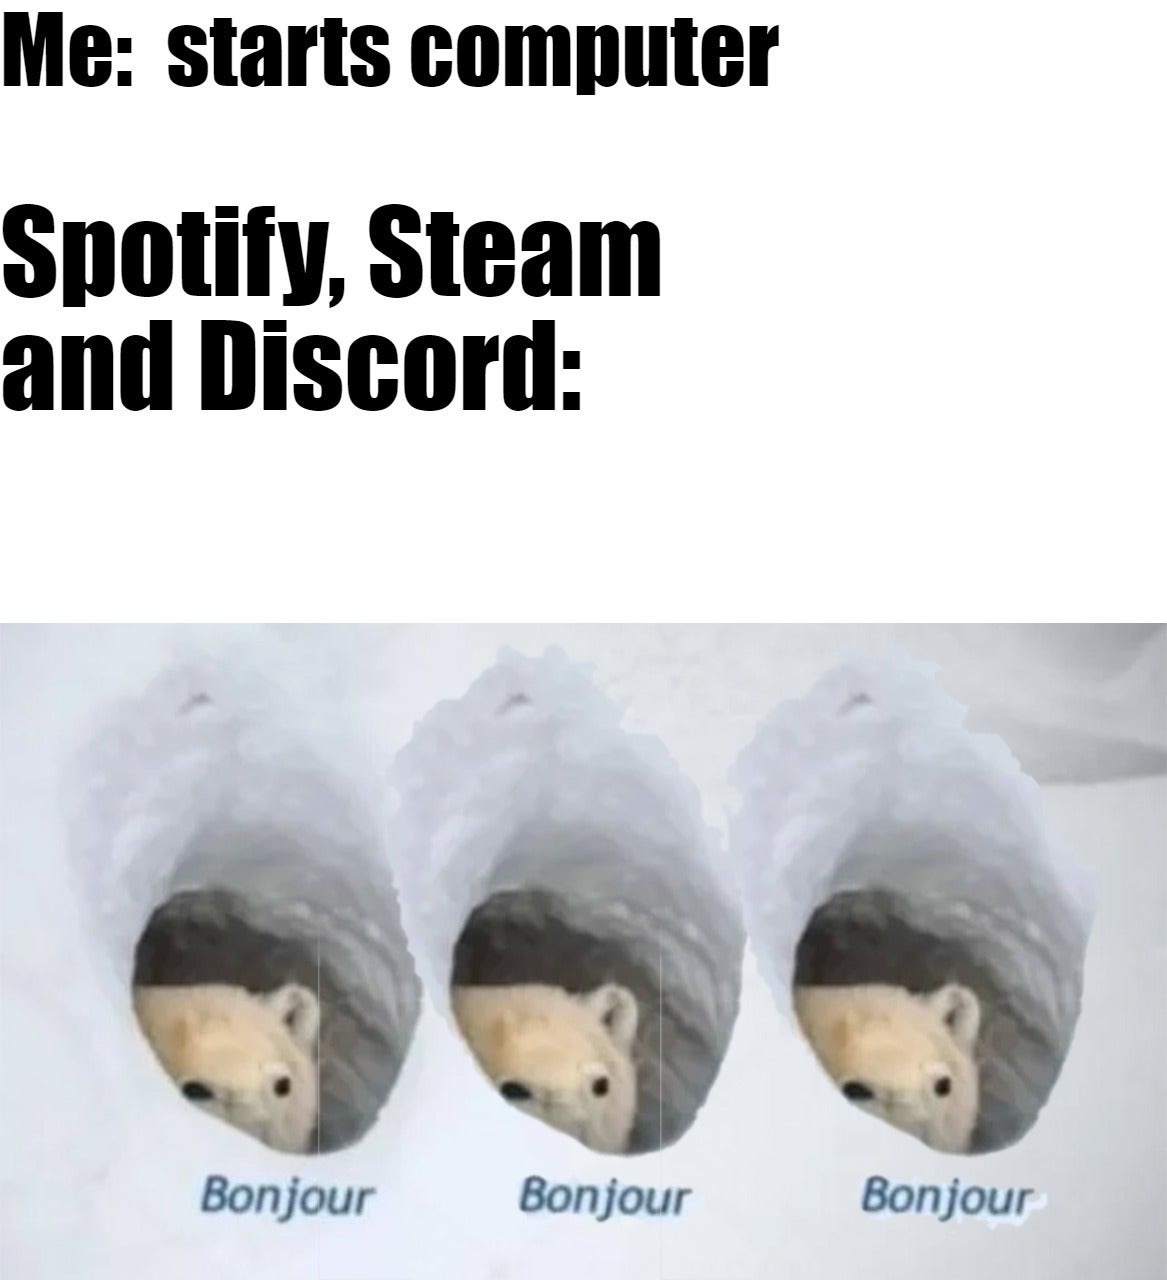 dank memes polar bear - Me starts computer Spotify, Steam and Discord Bonjour Bonjour Bonjour